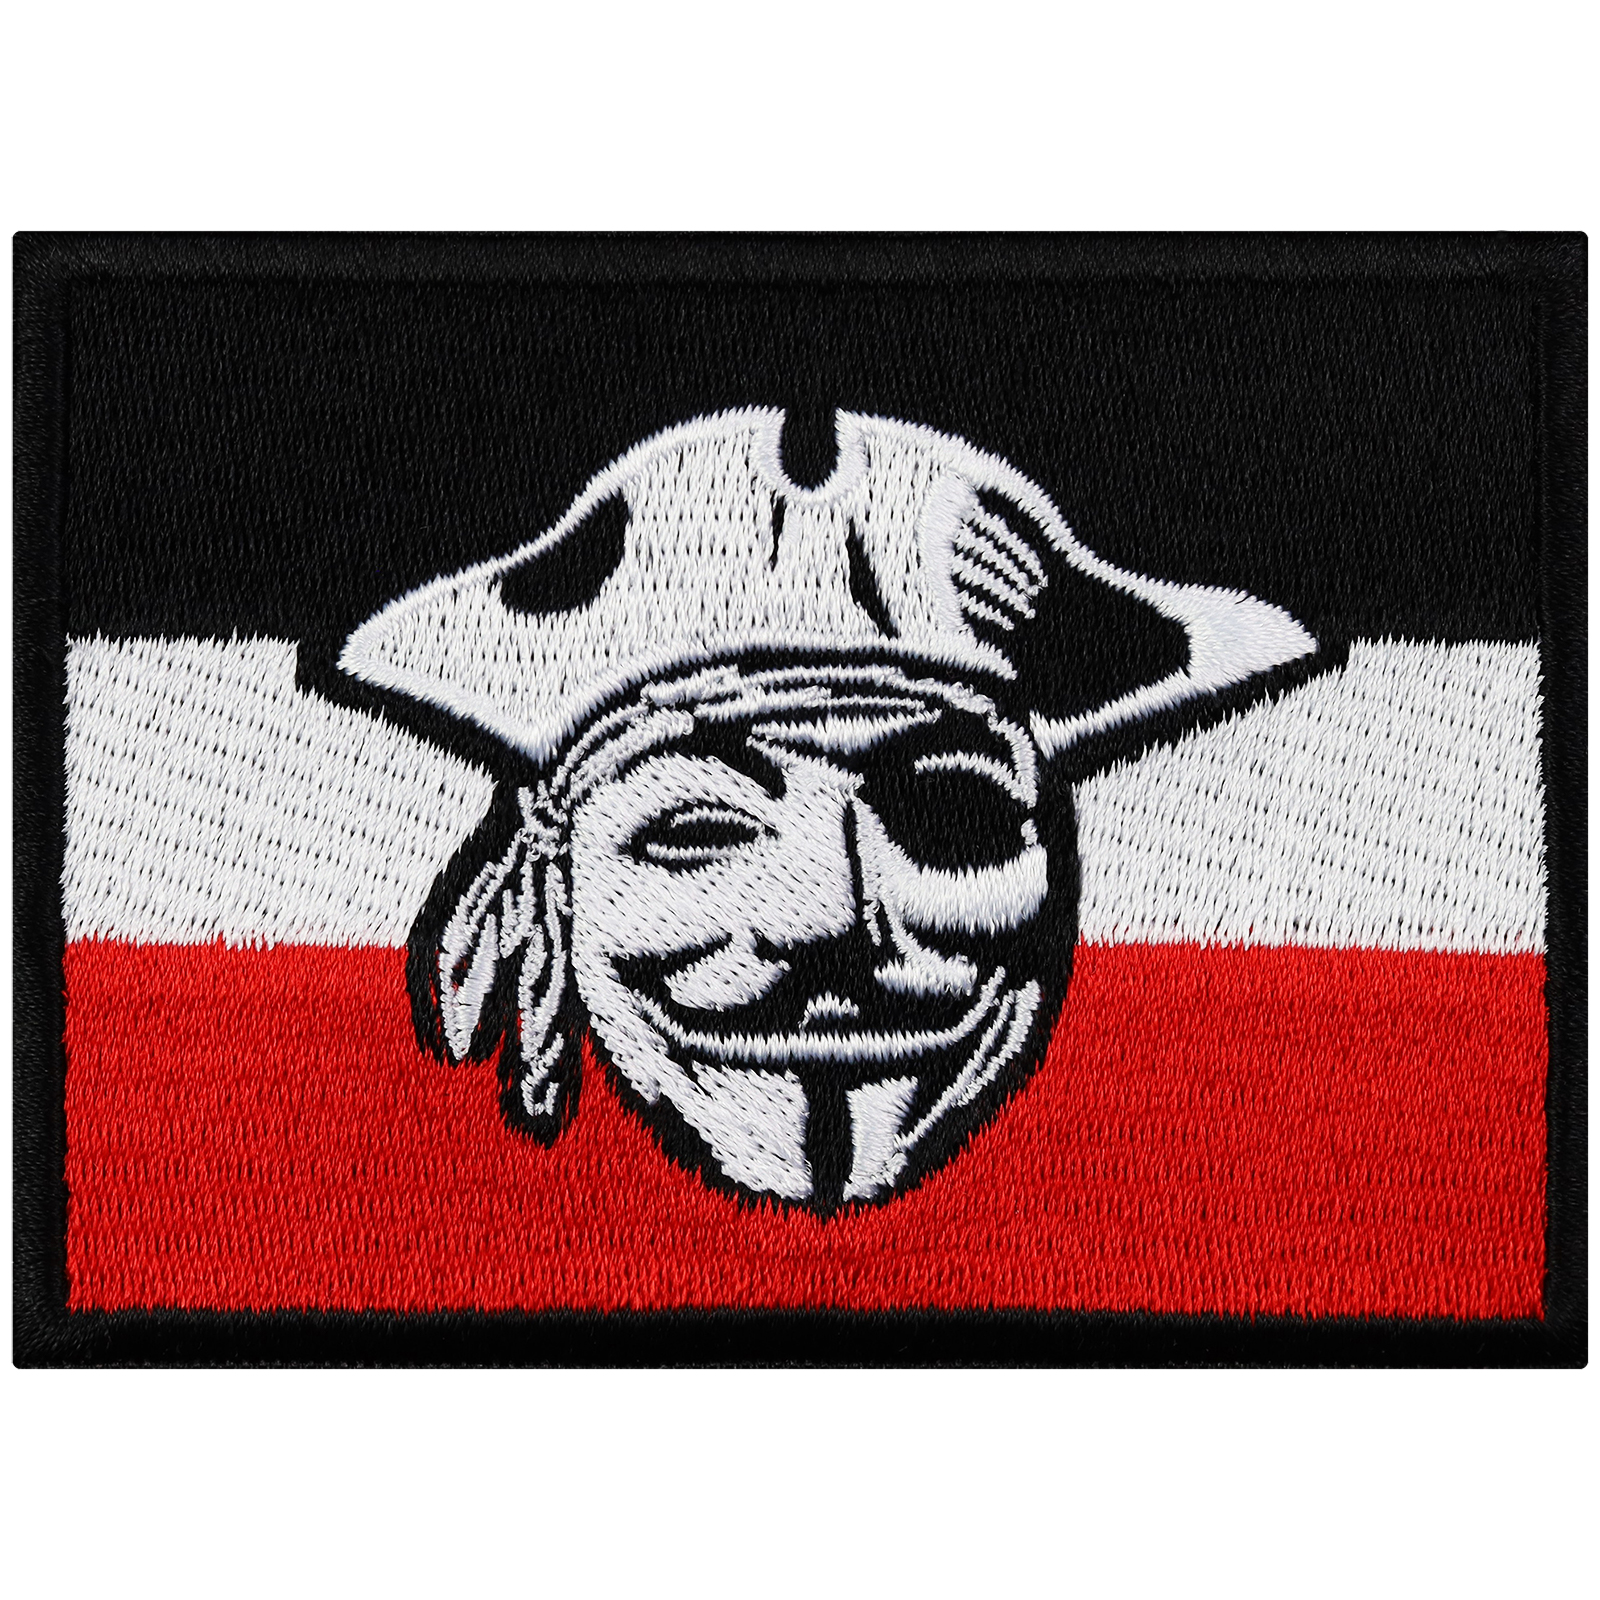 Flagge Pirate - Patch